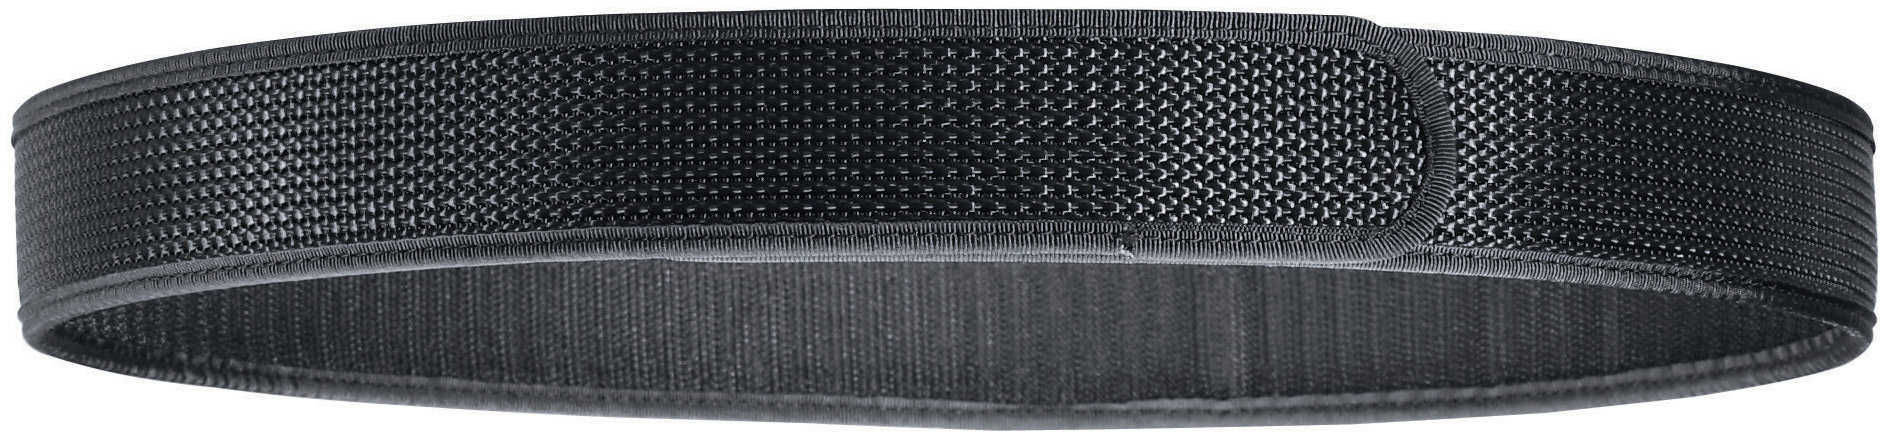 Bianchi Model 7205 Liner Belt 1.5" Size 34-40" Medium Hook and Loop Closure Nylon Black Finish 17707